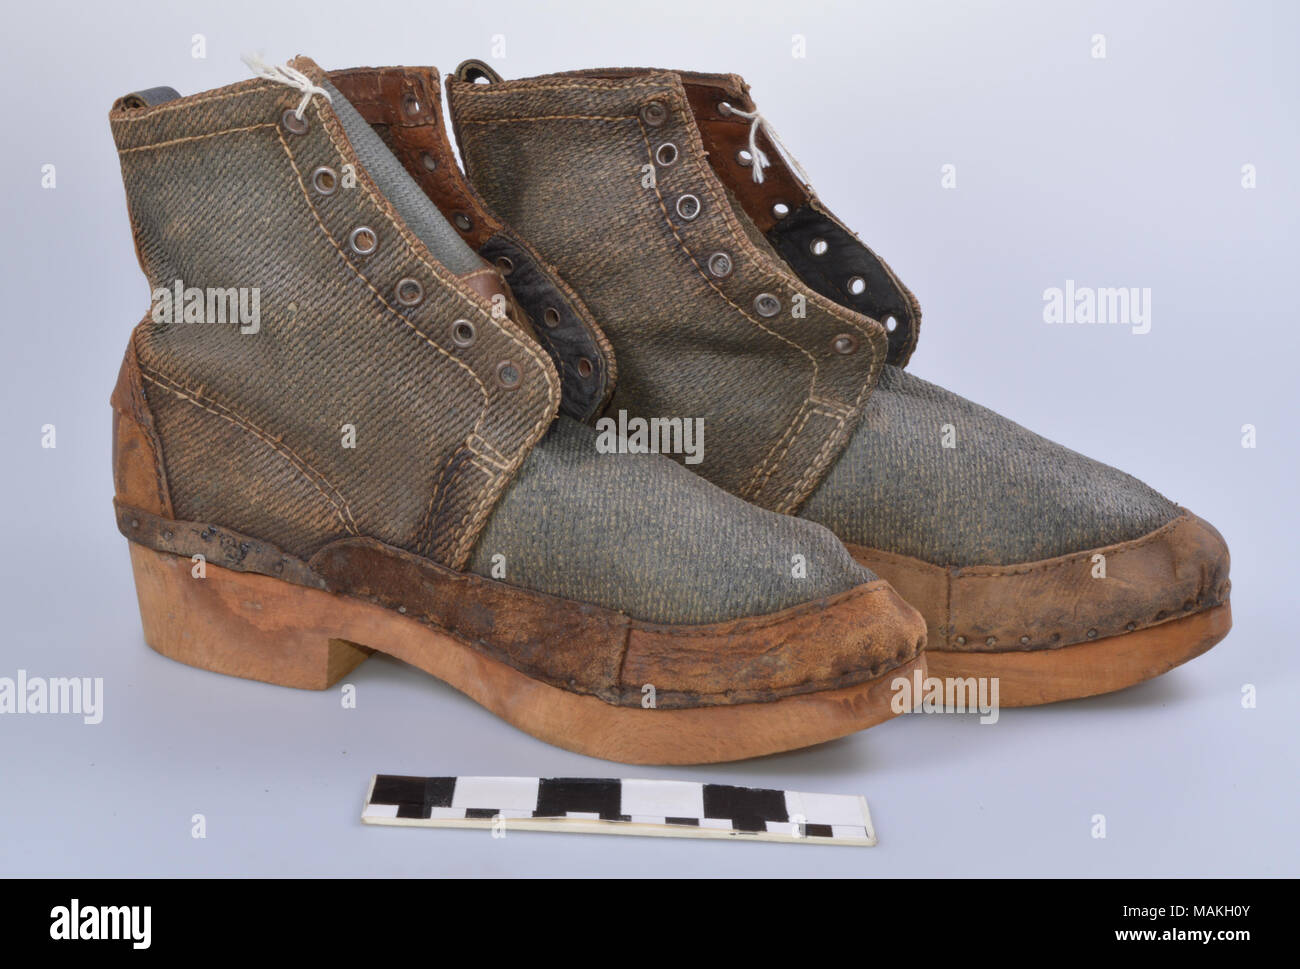 mens boots with wooden heel